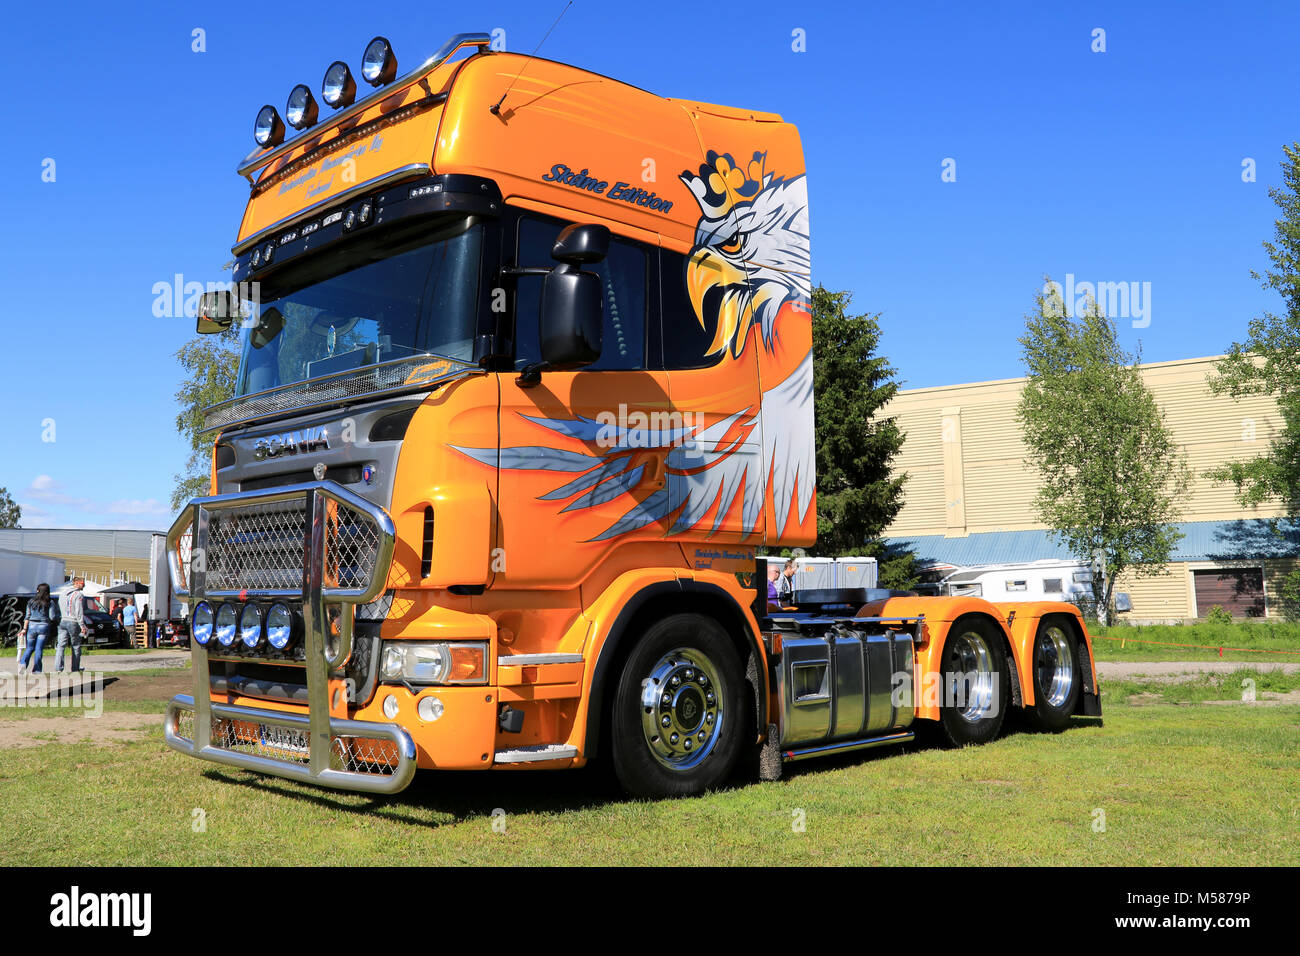 https://c8.alamy.com/comp/M5879P/porvoo-finland-june-28-2014-scania-v8-skane-edition-truck-on-display-M5879P.jpg